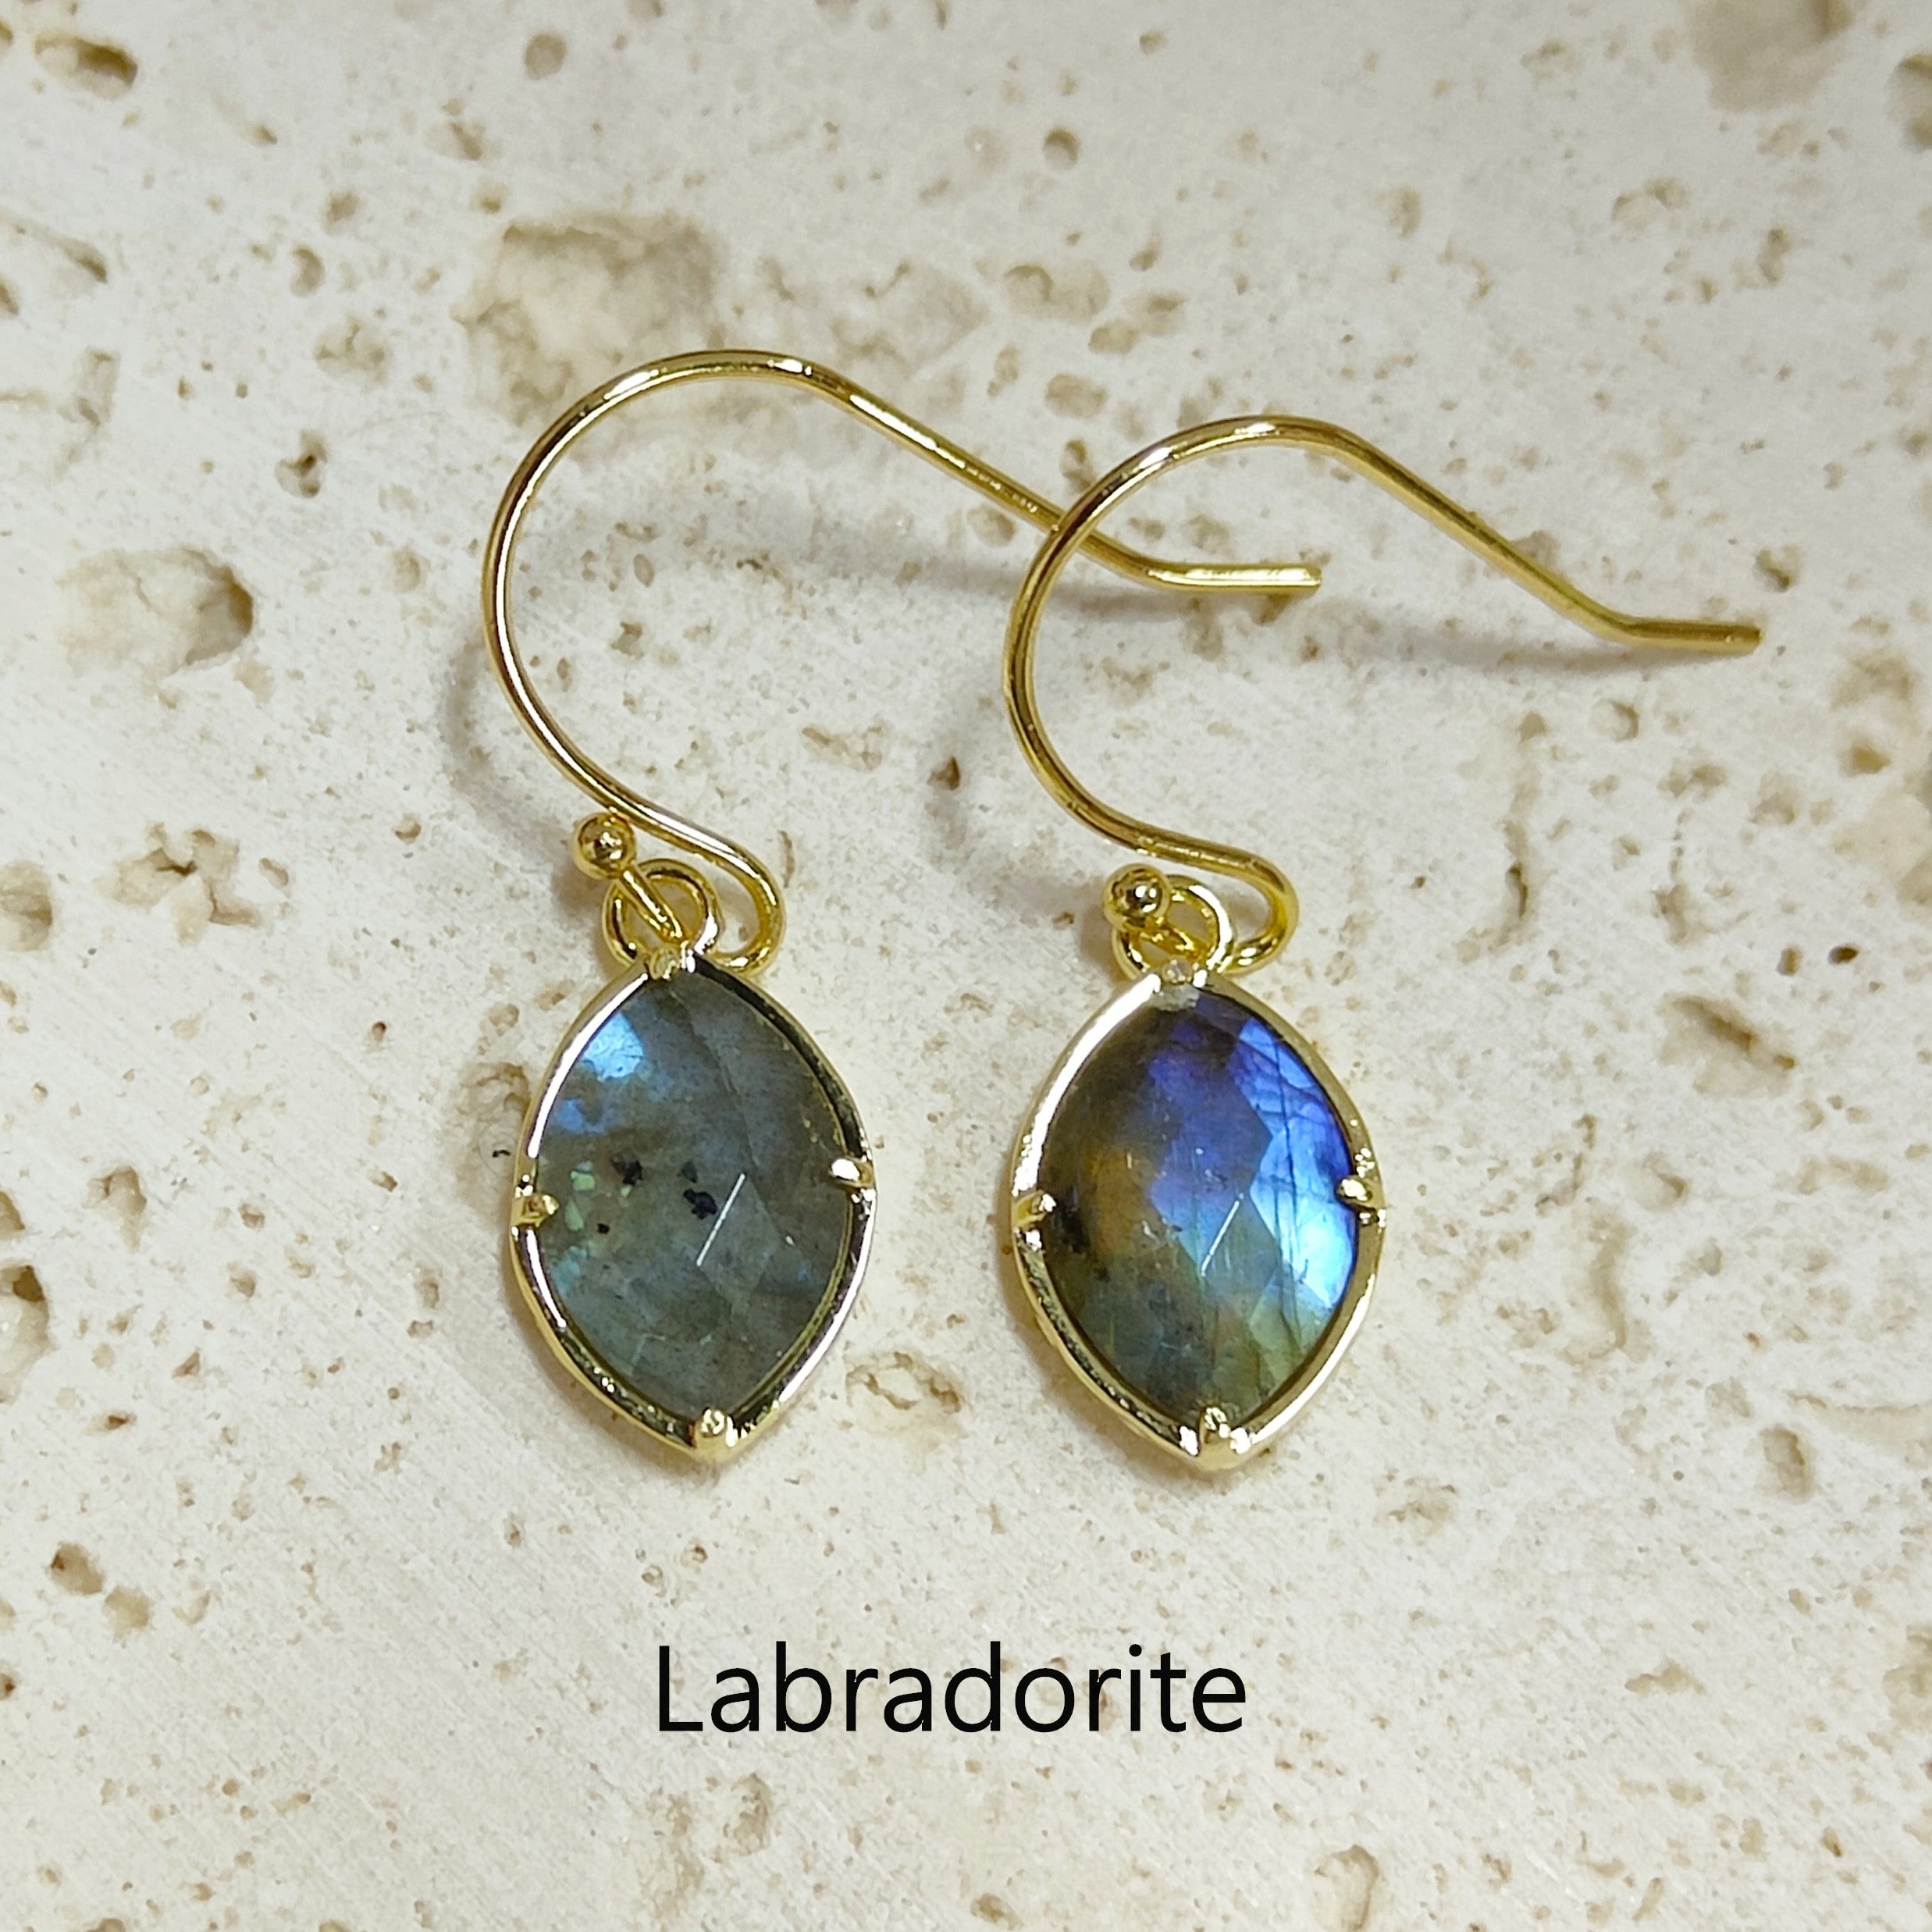 labradorite earrings Wholesale Gold Plated Marquise Gemstone Earrings, Healing Crystals Stone Earrings Jewelry AL573